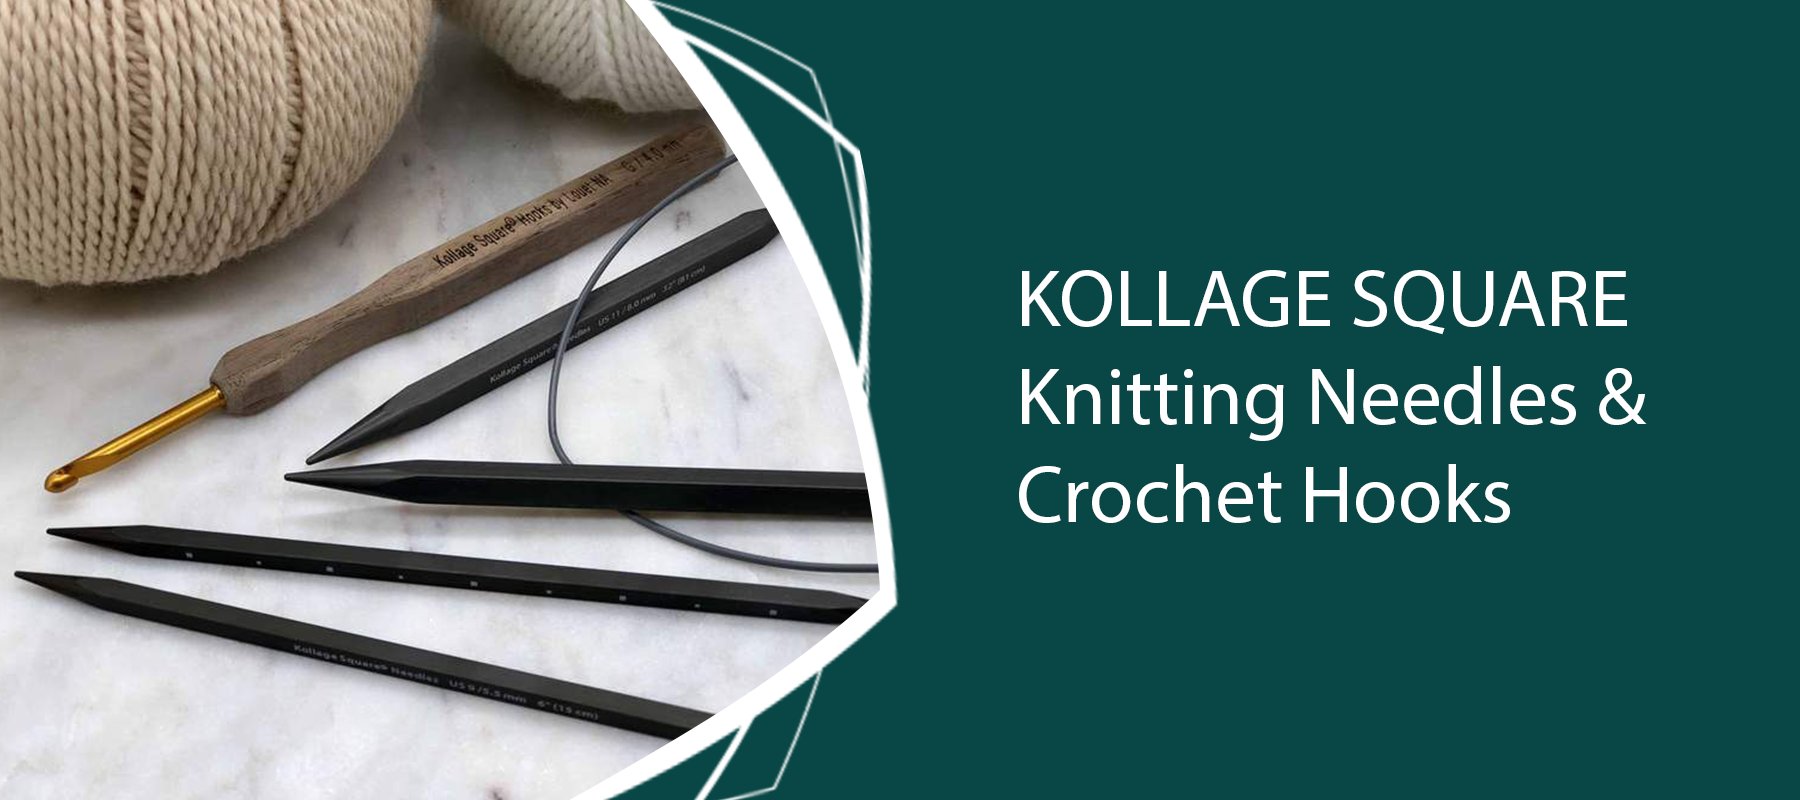 Kollage Square Knitting Needles and Crochet Hooks